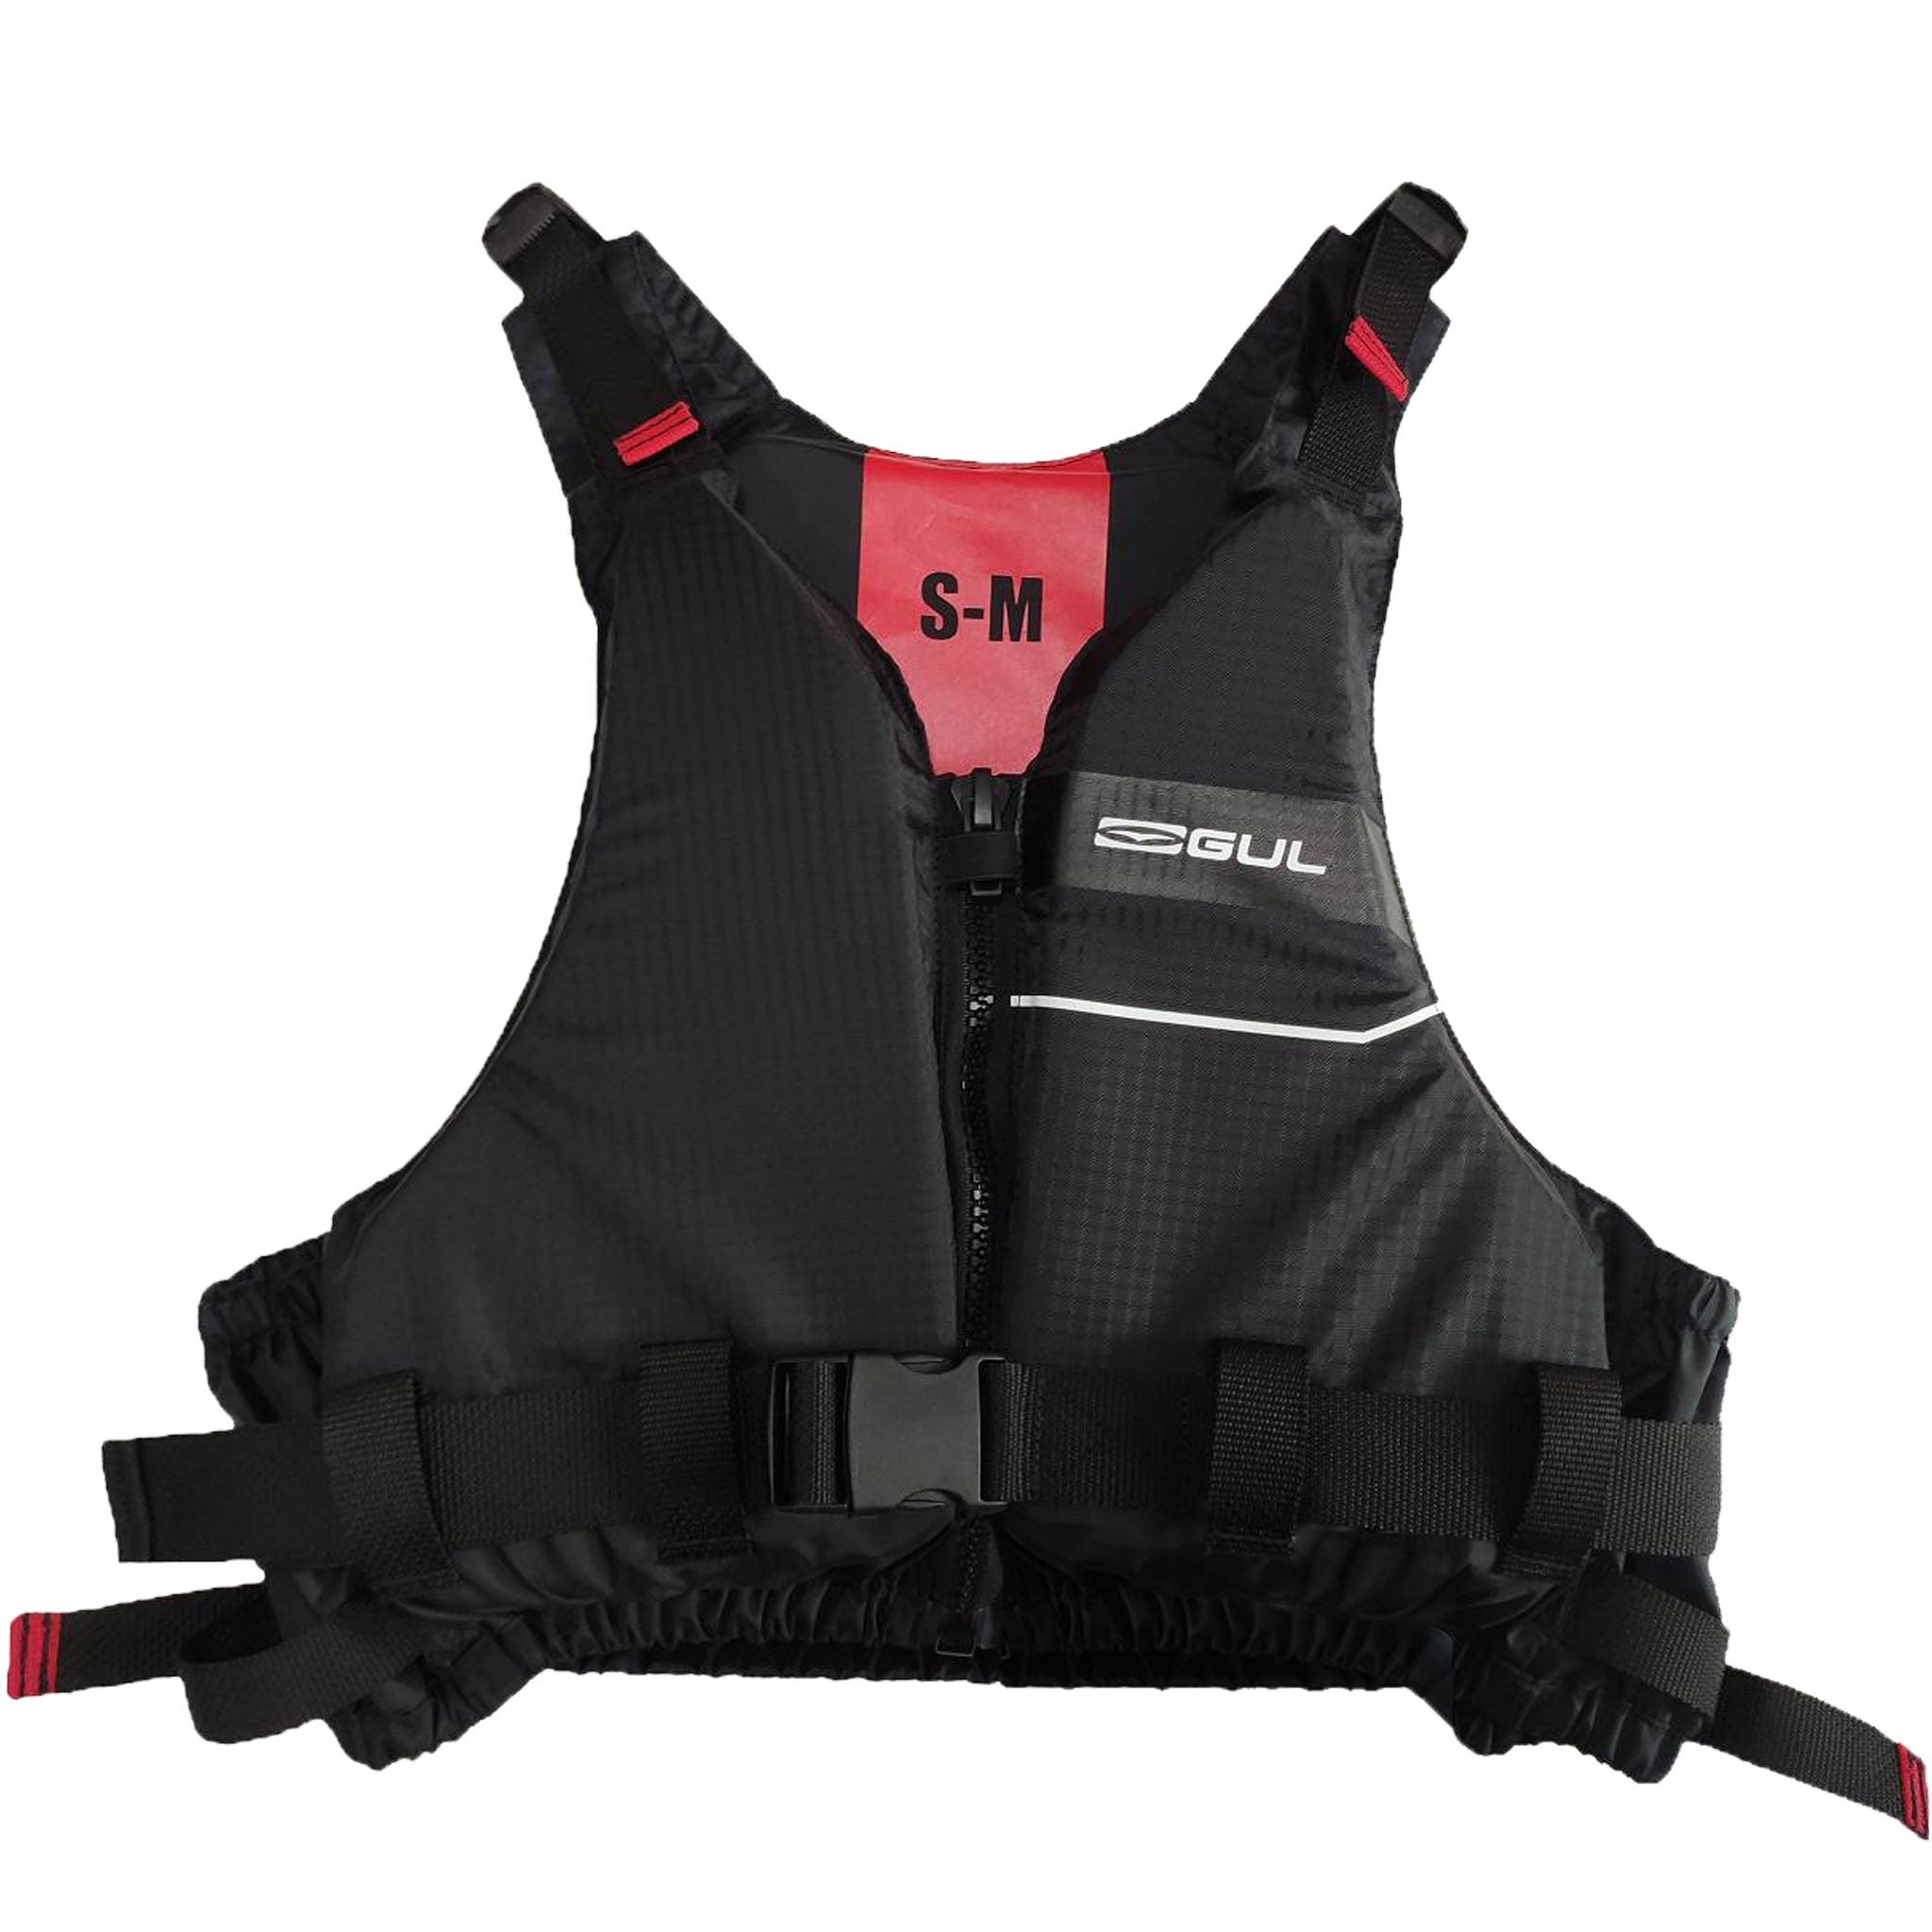 Junior Gul Rec Vest 50N Buoyancy Aid for Paddlesports Black